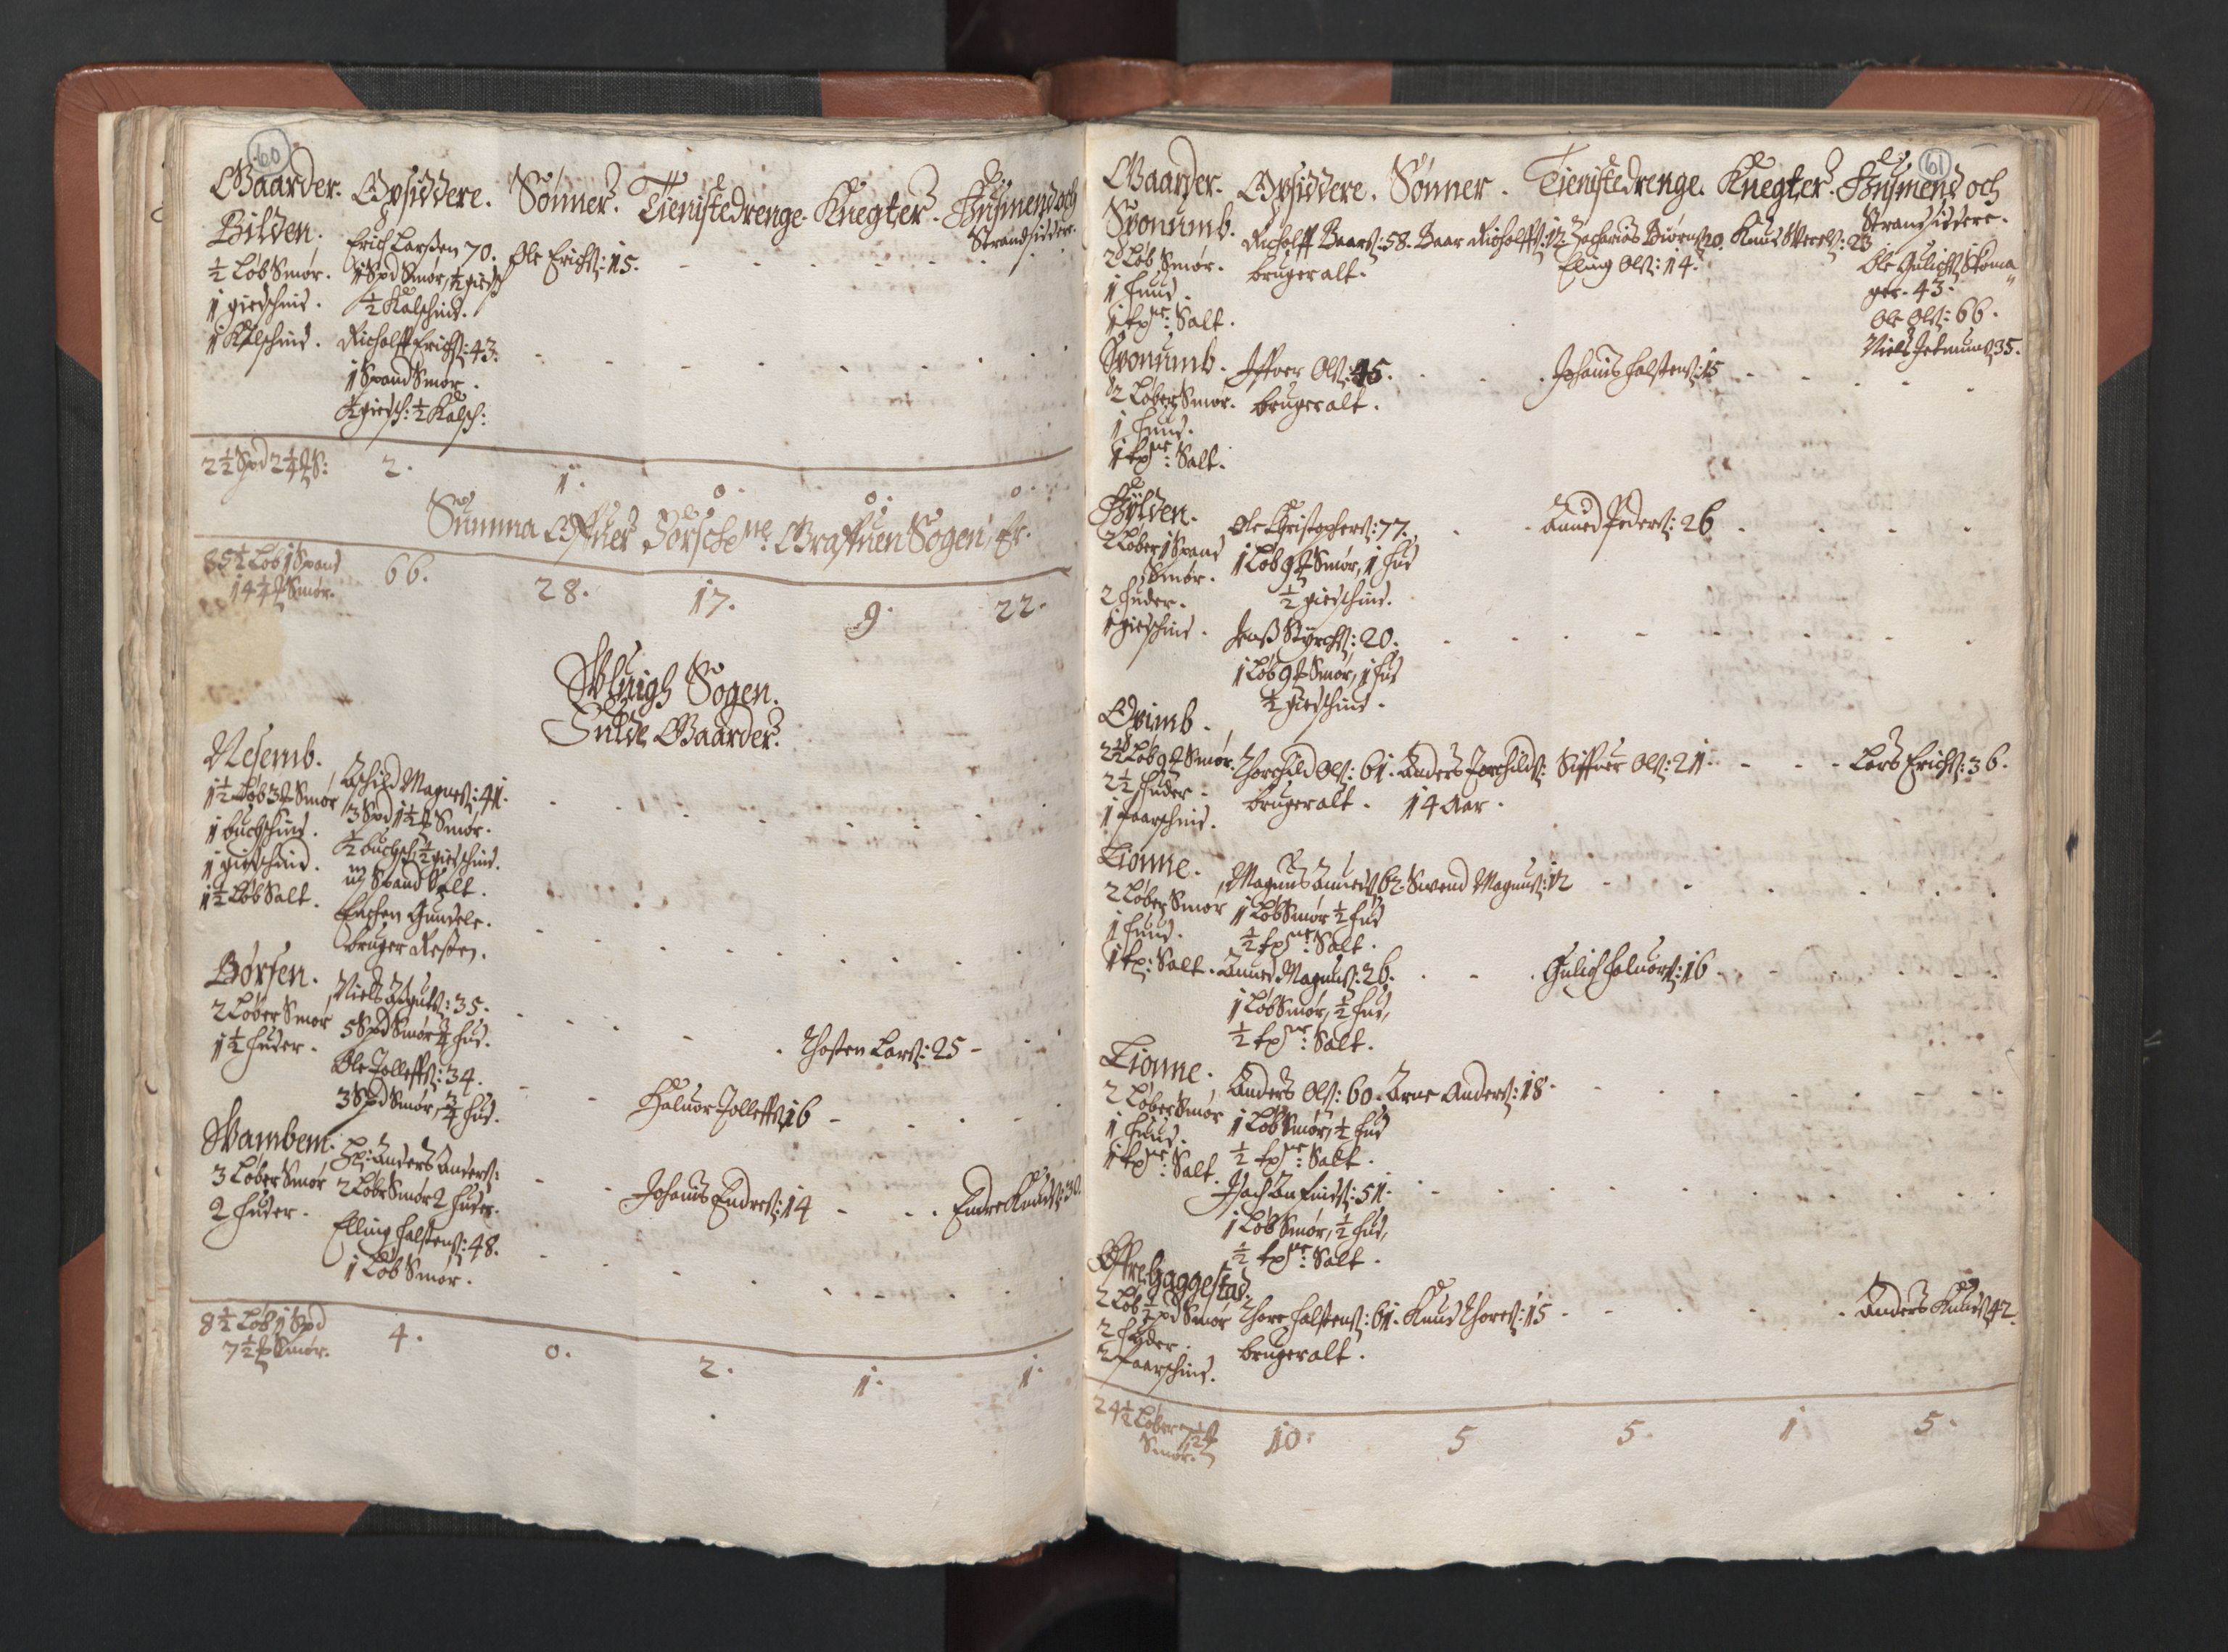 RA, Fogdenes og sorenskrivernes manntall 1664-1666, nr. 14: Hardanger len, Ytre Sogn fogderi og Indre Sogn fogderi, 1664-1665, s. 60-61